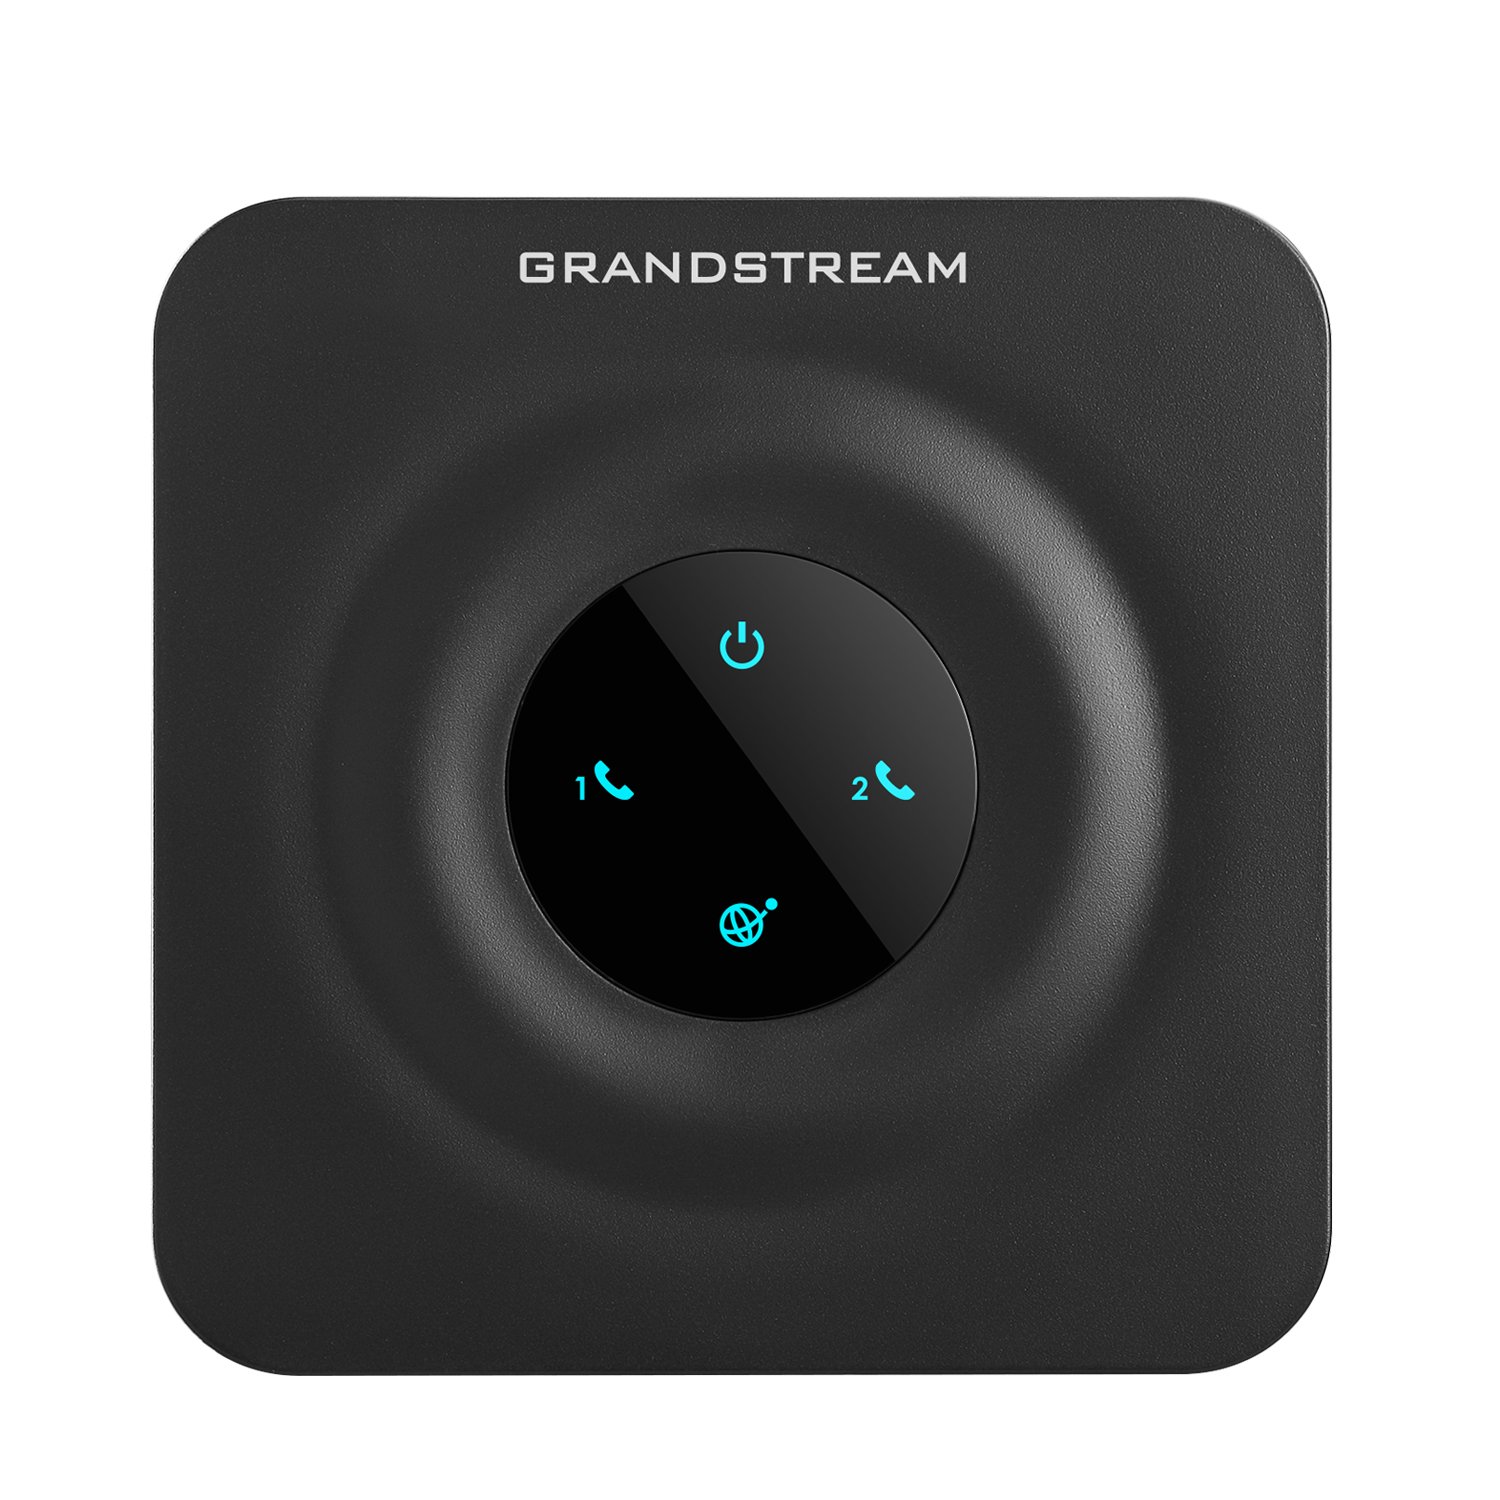 Grandstream GS-HT802 2 Port Analog Telephone Adapter VoIP Phone & Device, Black